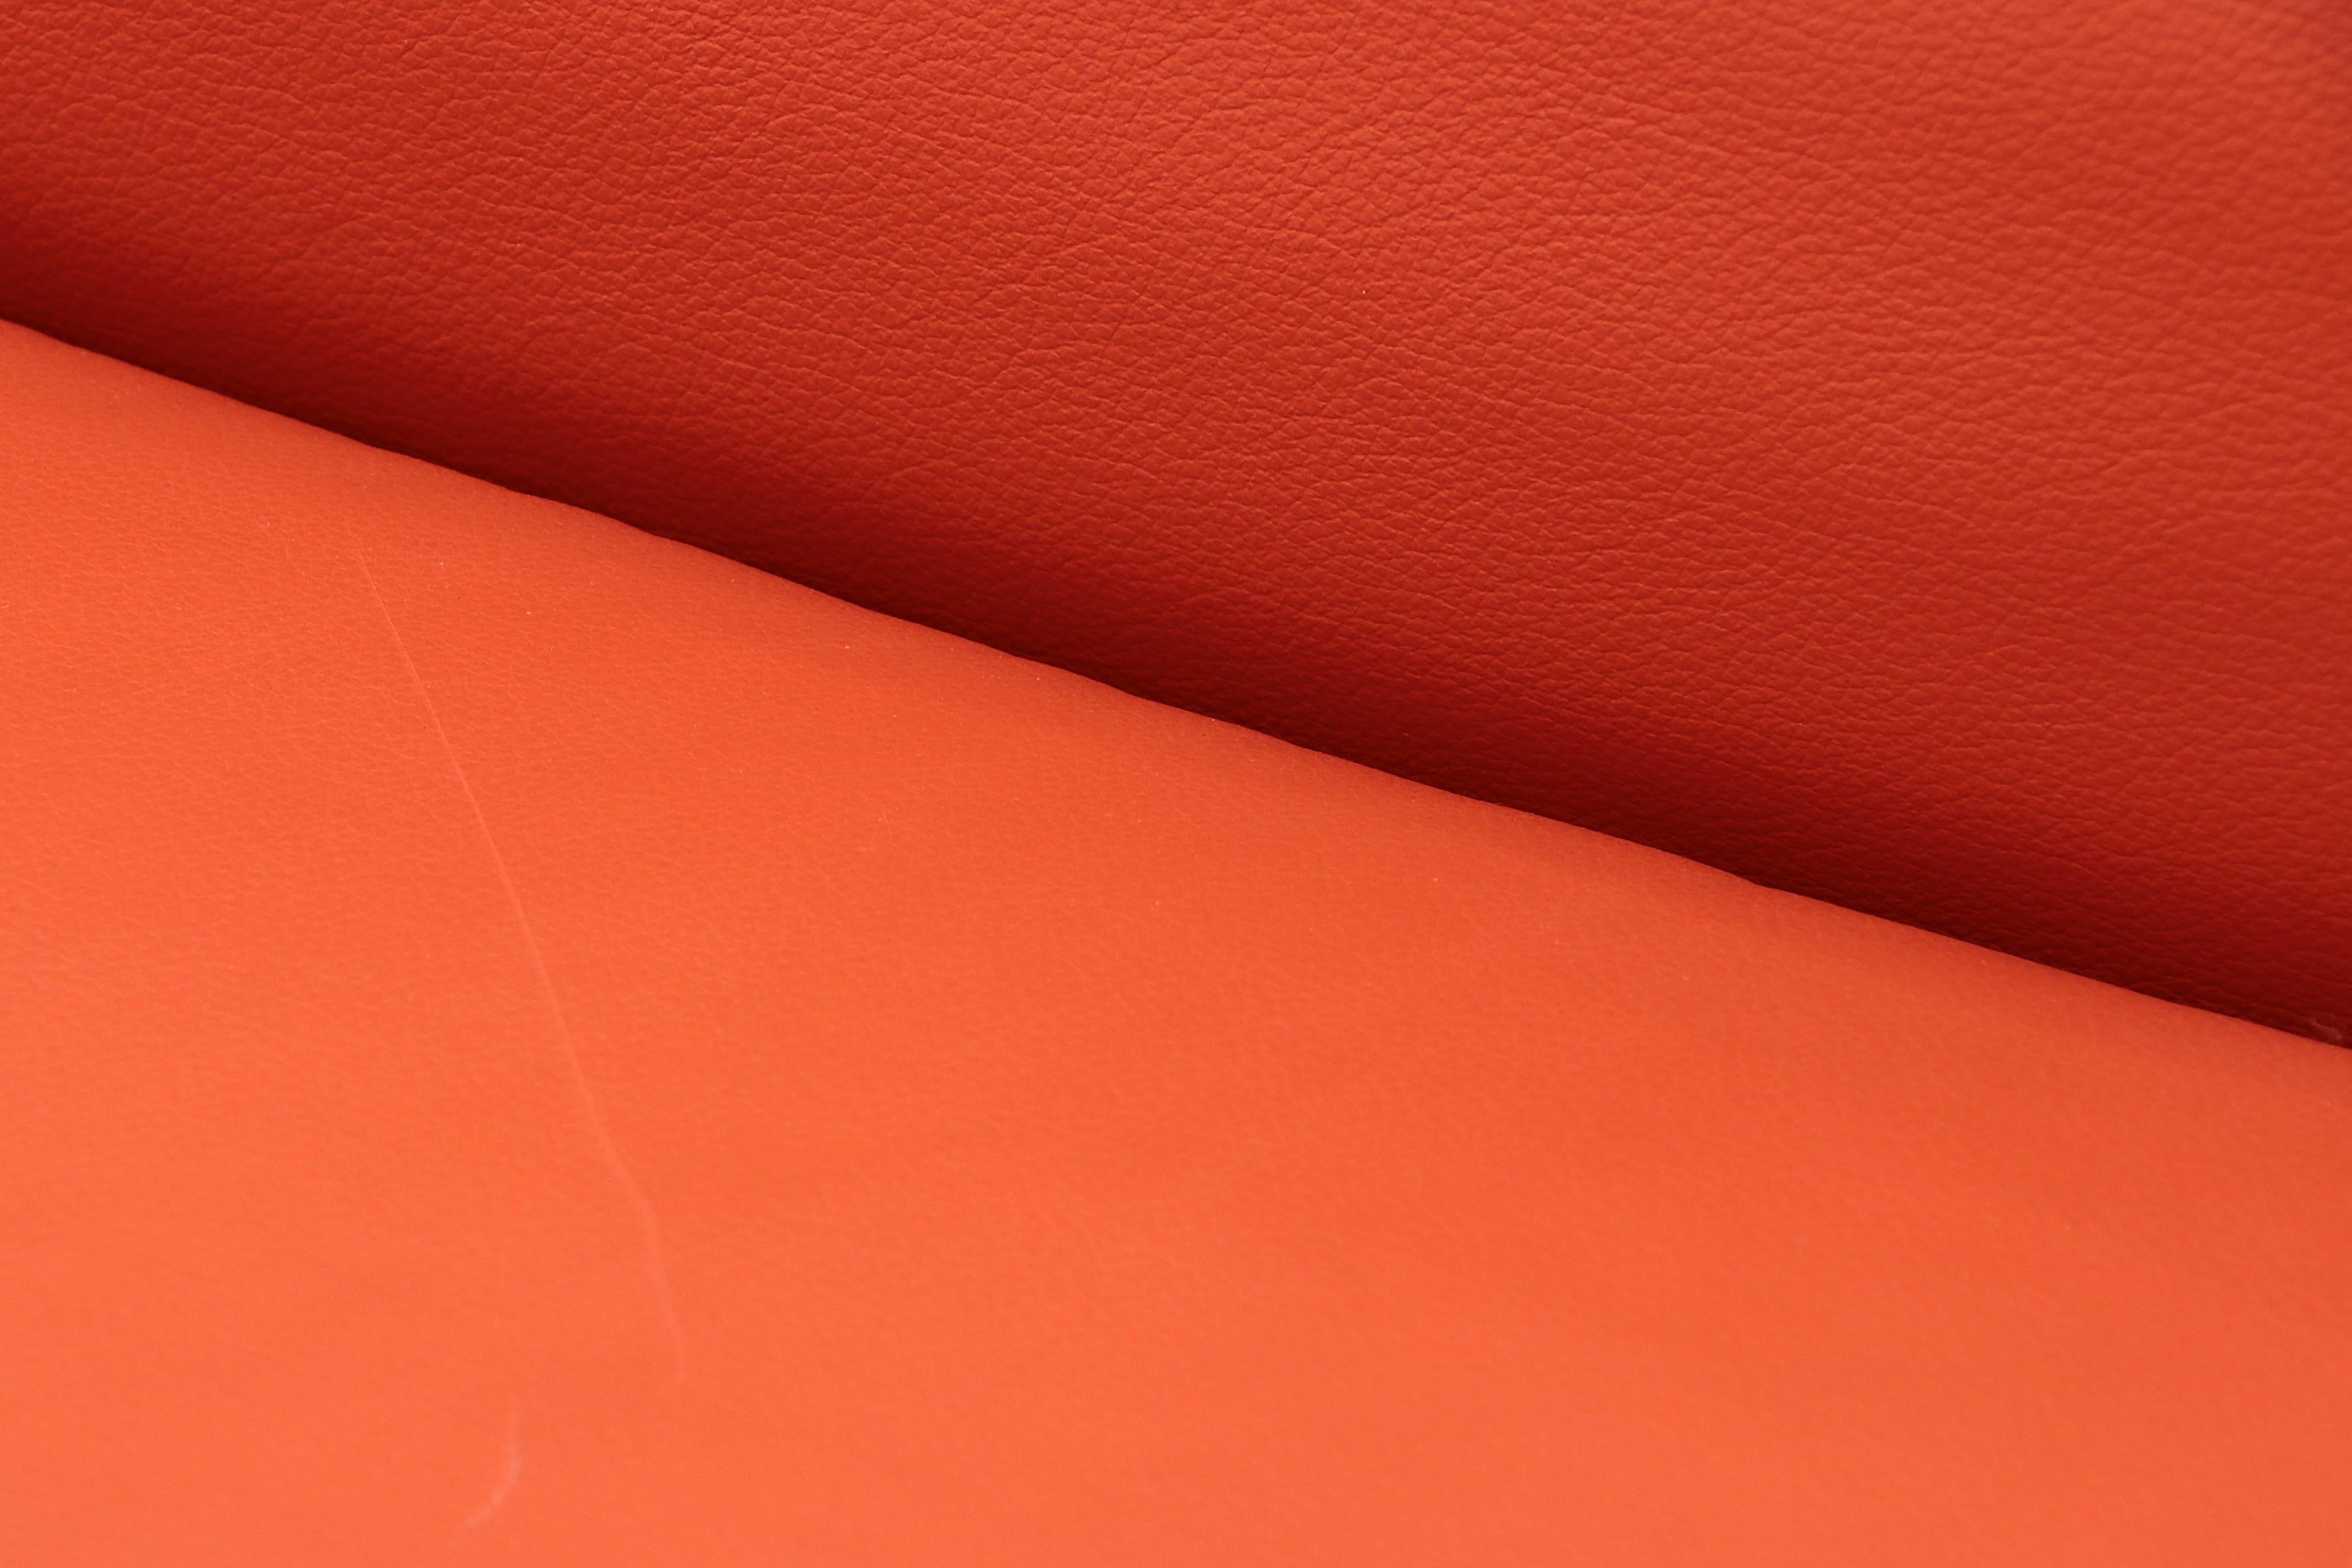 Mario Bellini Amanta Modular Sofa in Orange Leather for C&B Italy, 1960s For Sale 3